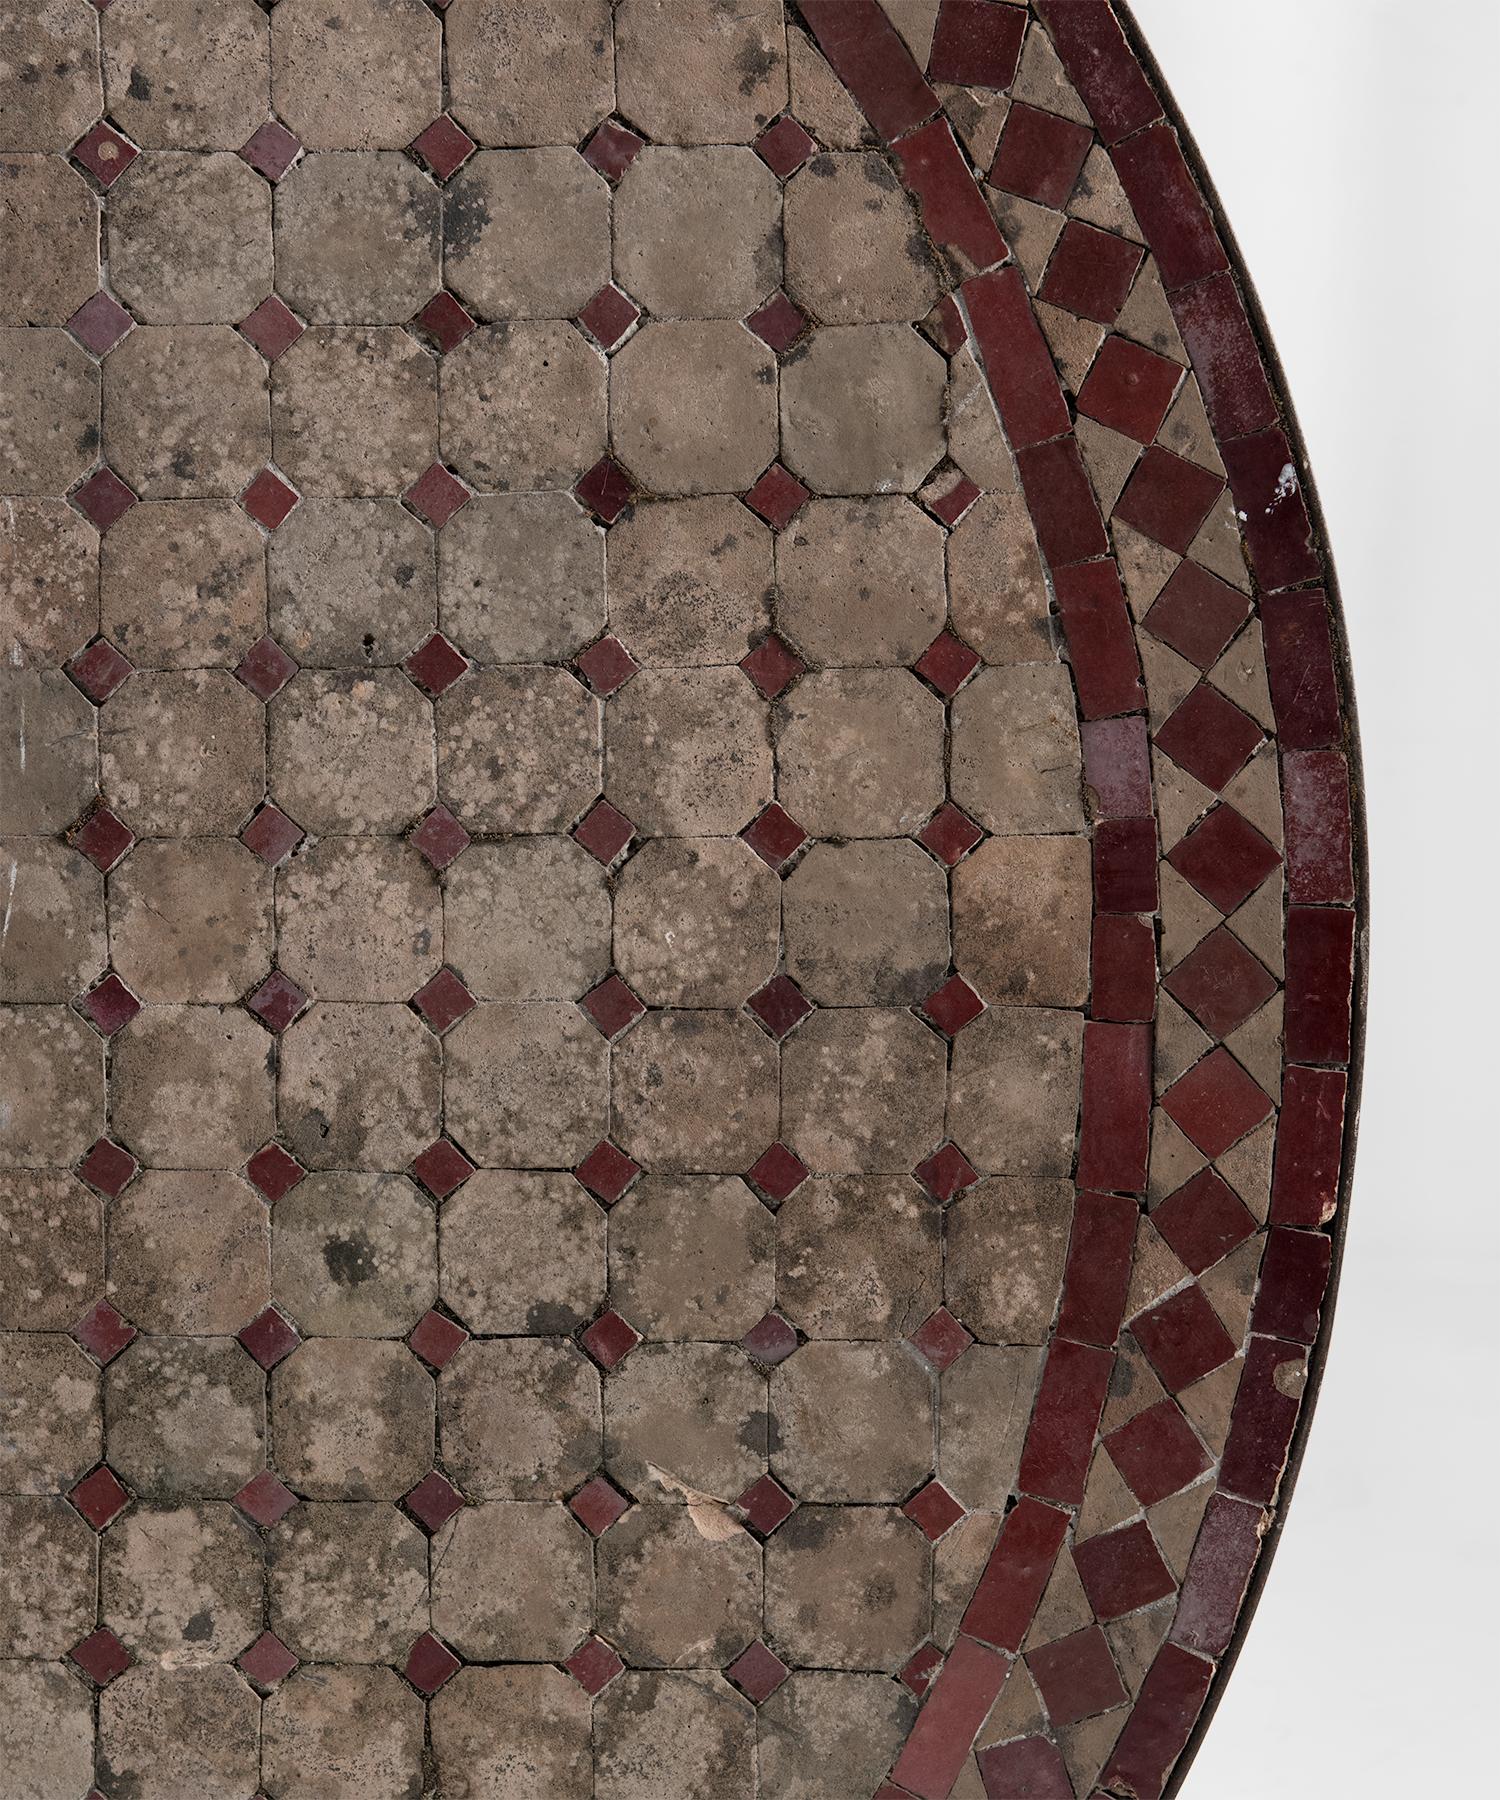 Mosaic Tile Table, Italy, circa 1930 (Mitte des 20. Jahrhunderts)